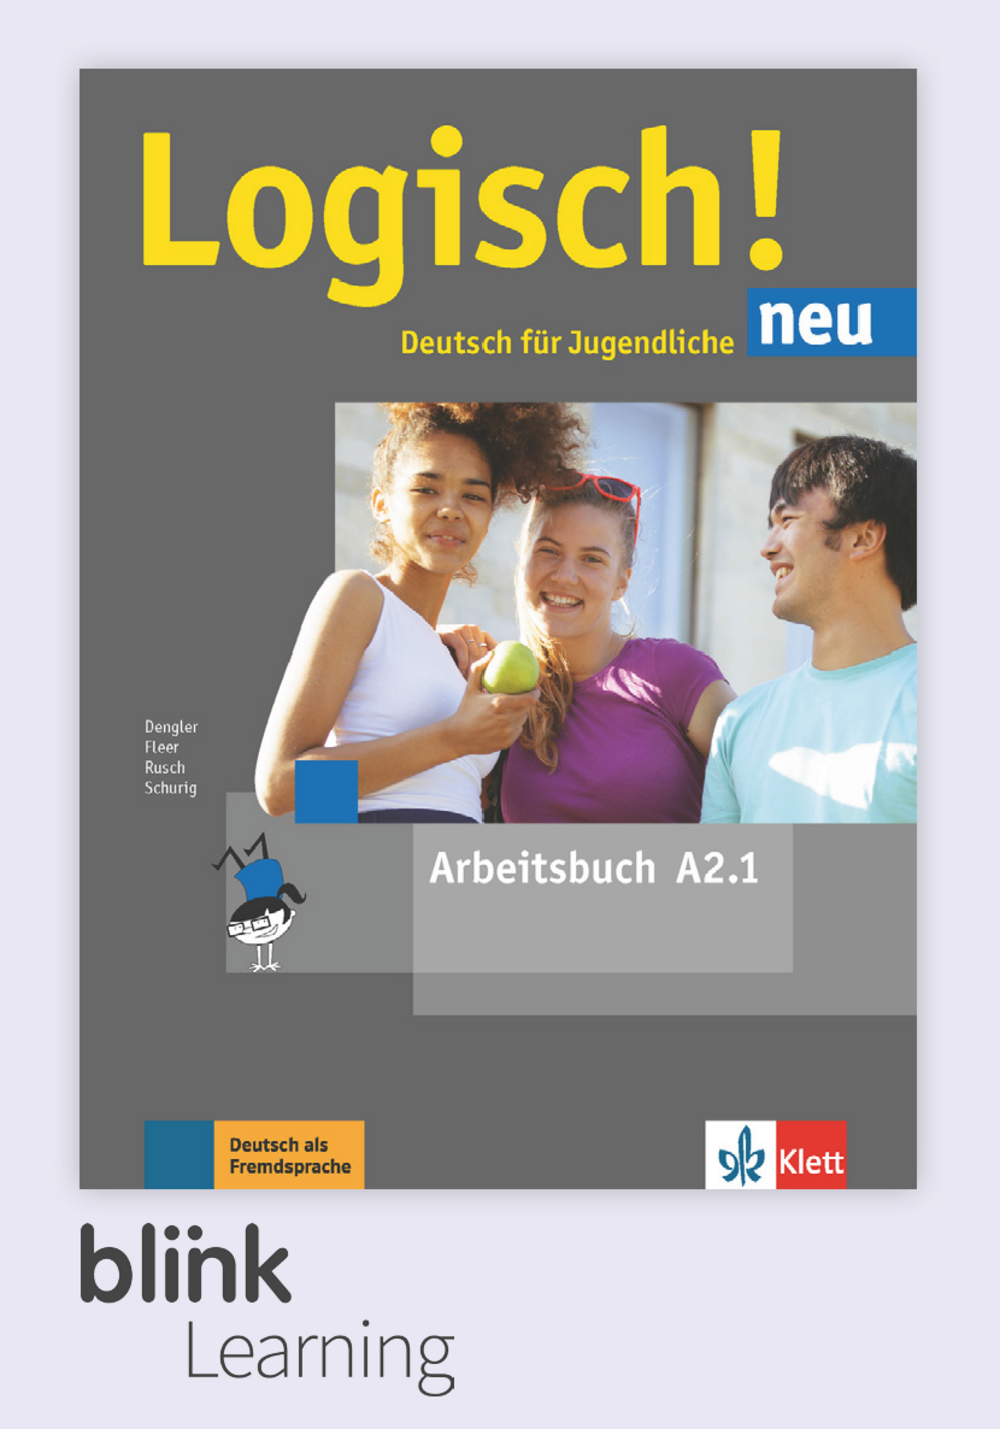 Logisch! NEU A2.1 Digital Arbeitsbuch für Unterrichtende / Цифровая рабочая тетрадь для учителя